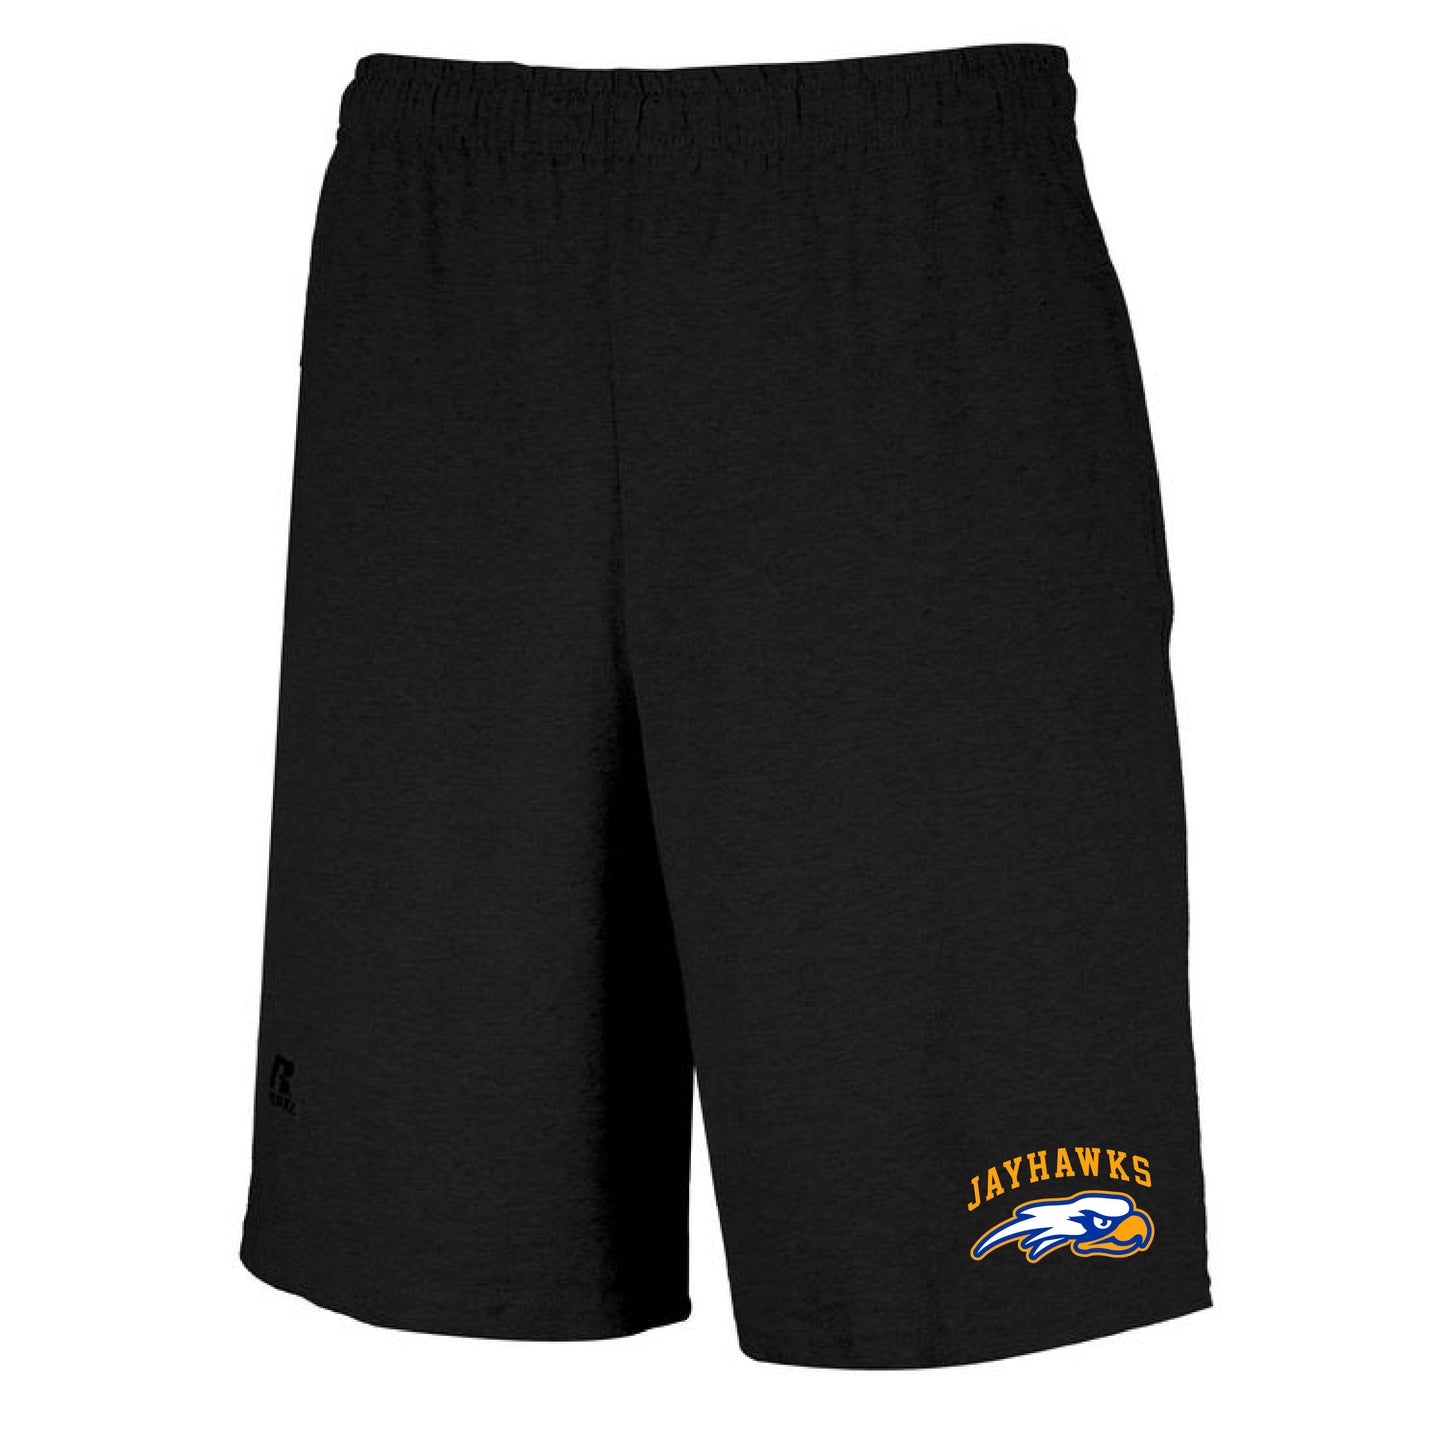 AMS Jayhawks Lightweight Unisex Pocketed Shorts (T4-25843M)